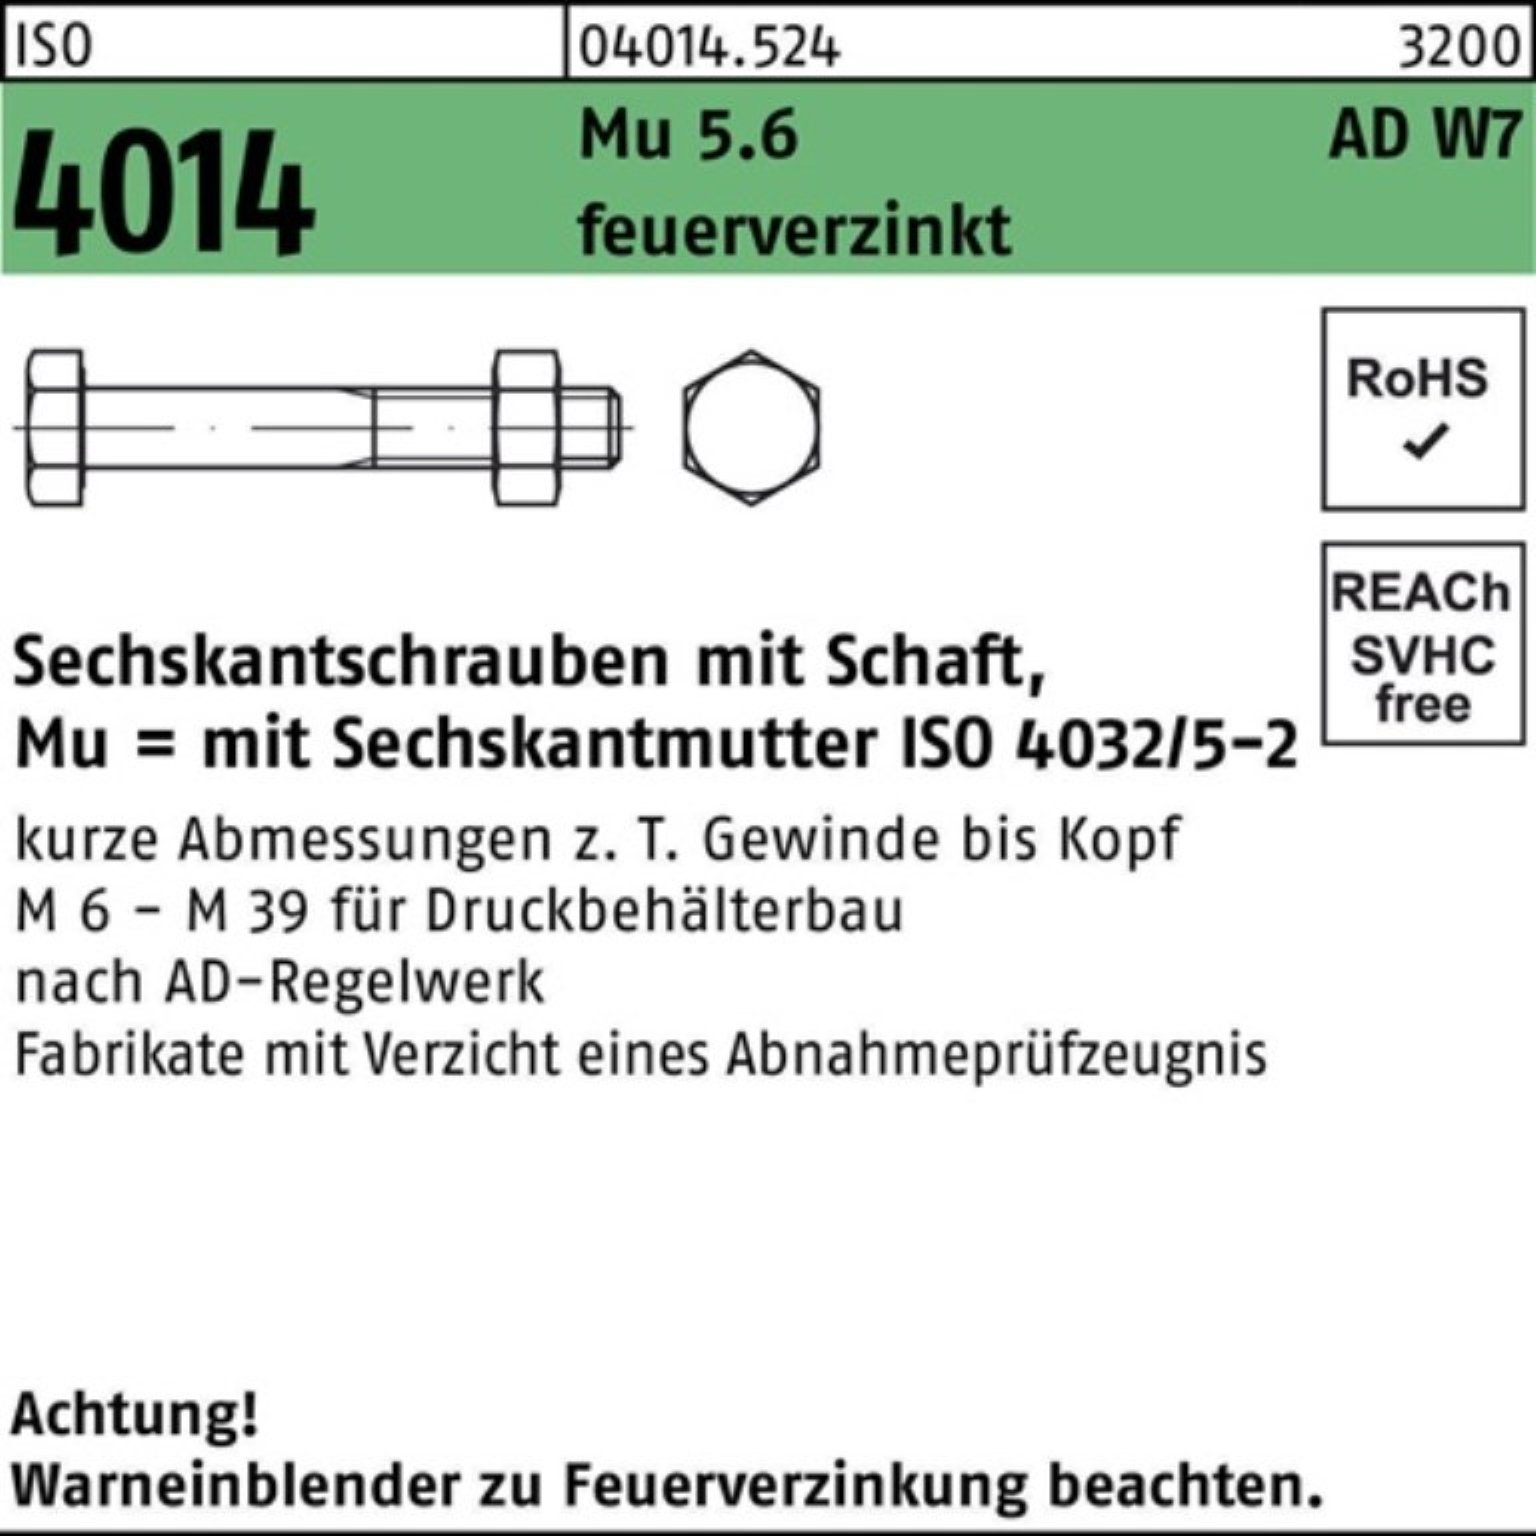 Bufab Sechskantschraube 100er Pack Sechskantschraube feuerv Mu W7 ISO 120 Schaft 5.6 4014 M16x